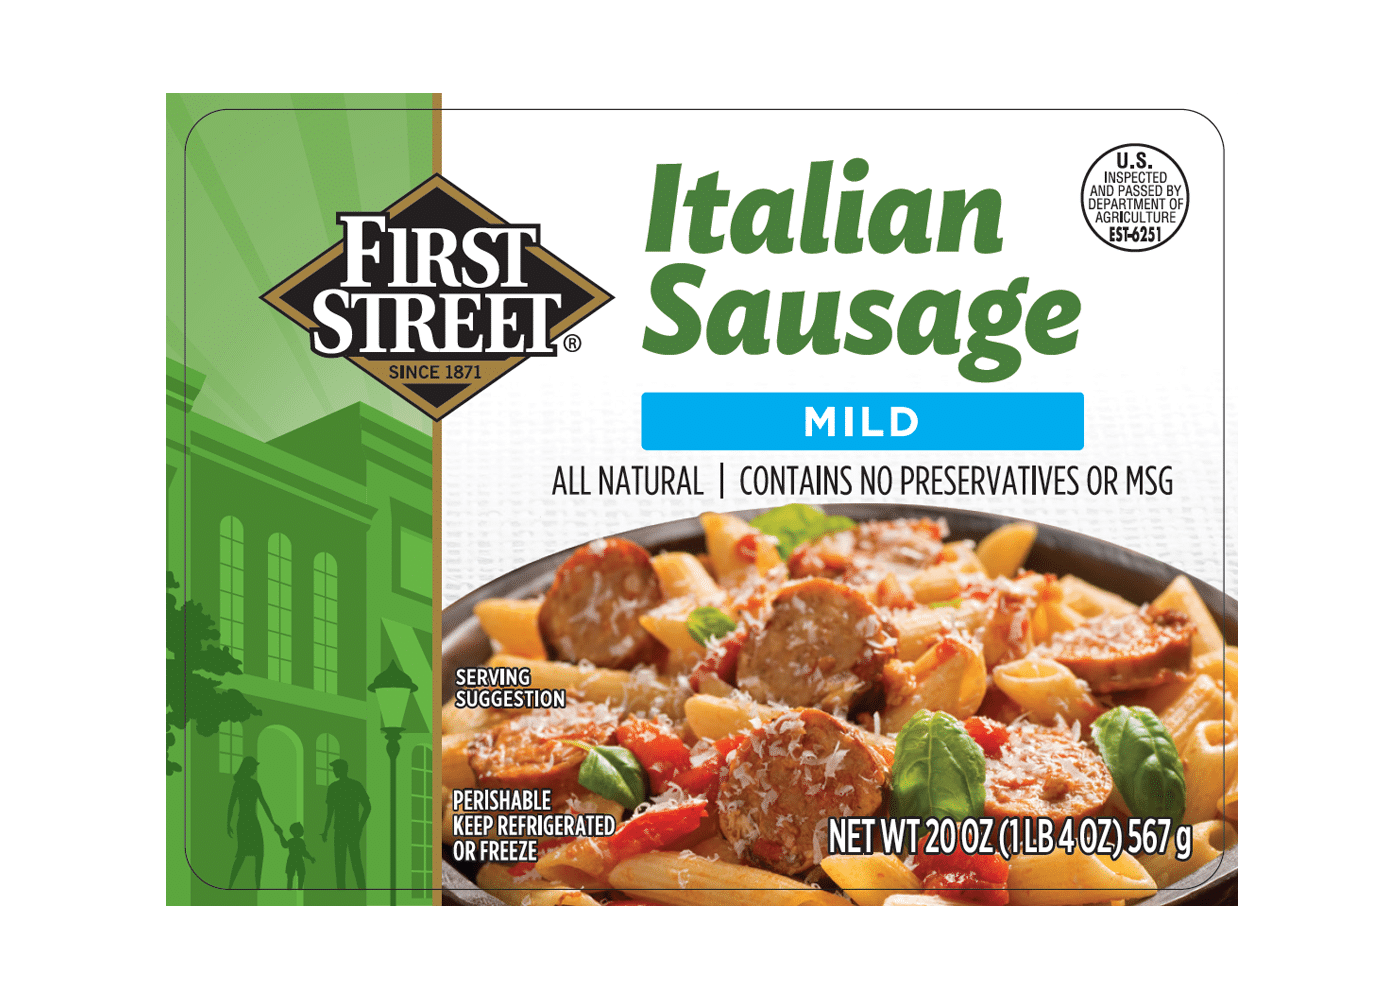 First Street Mild Italian Sausage